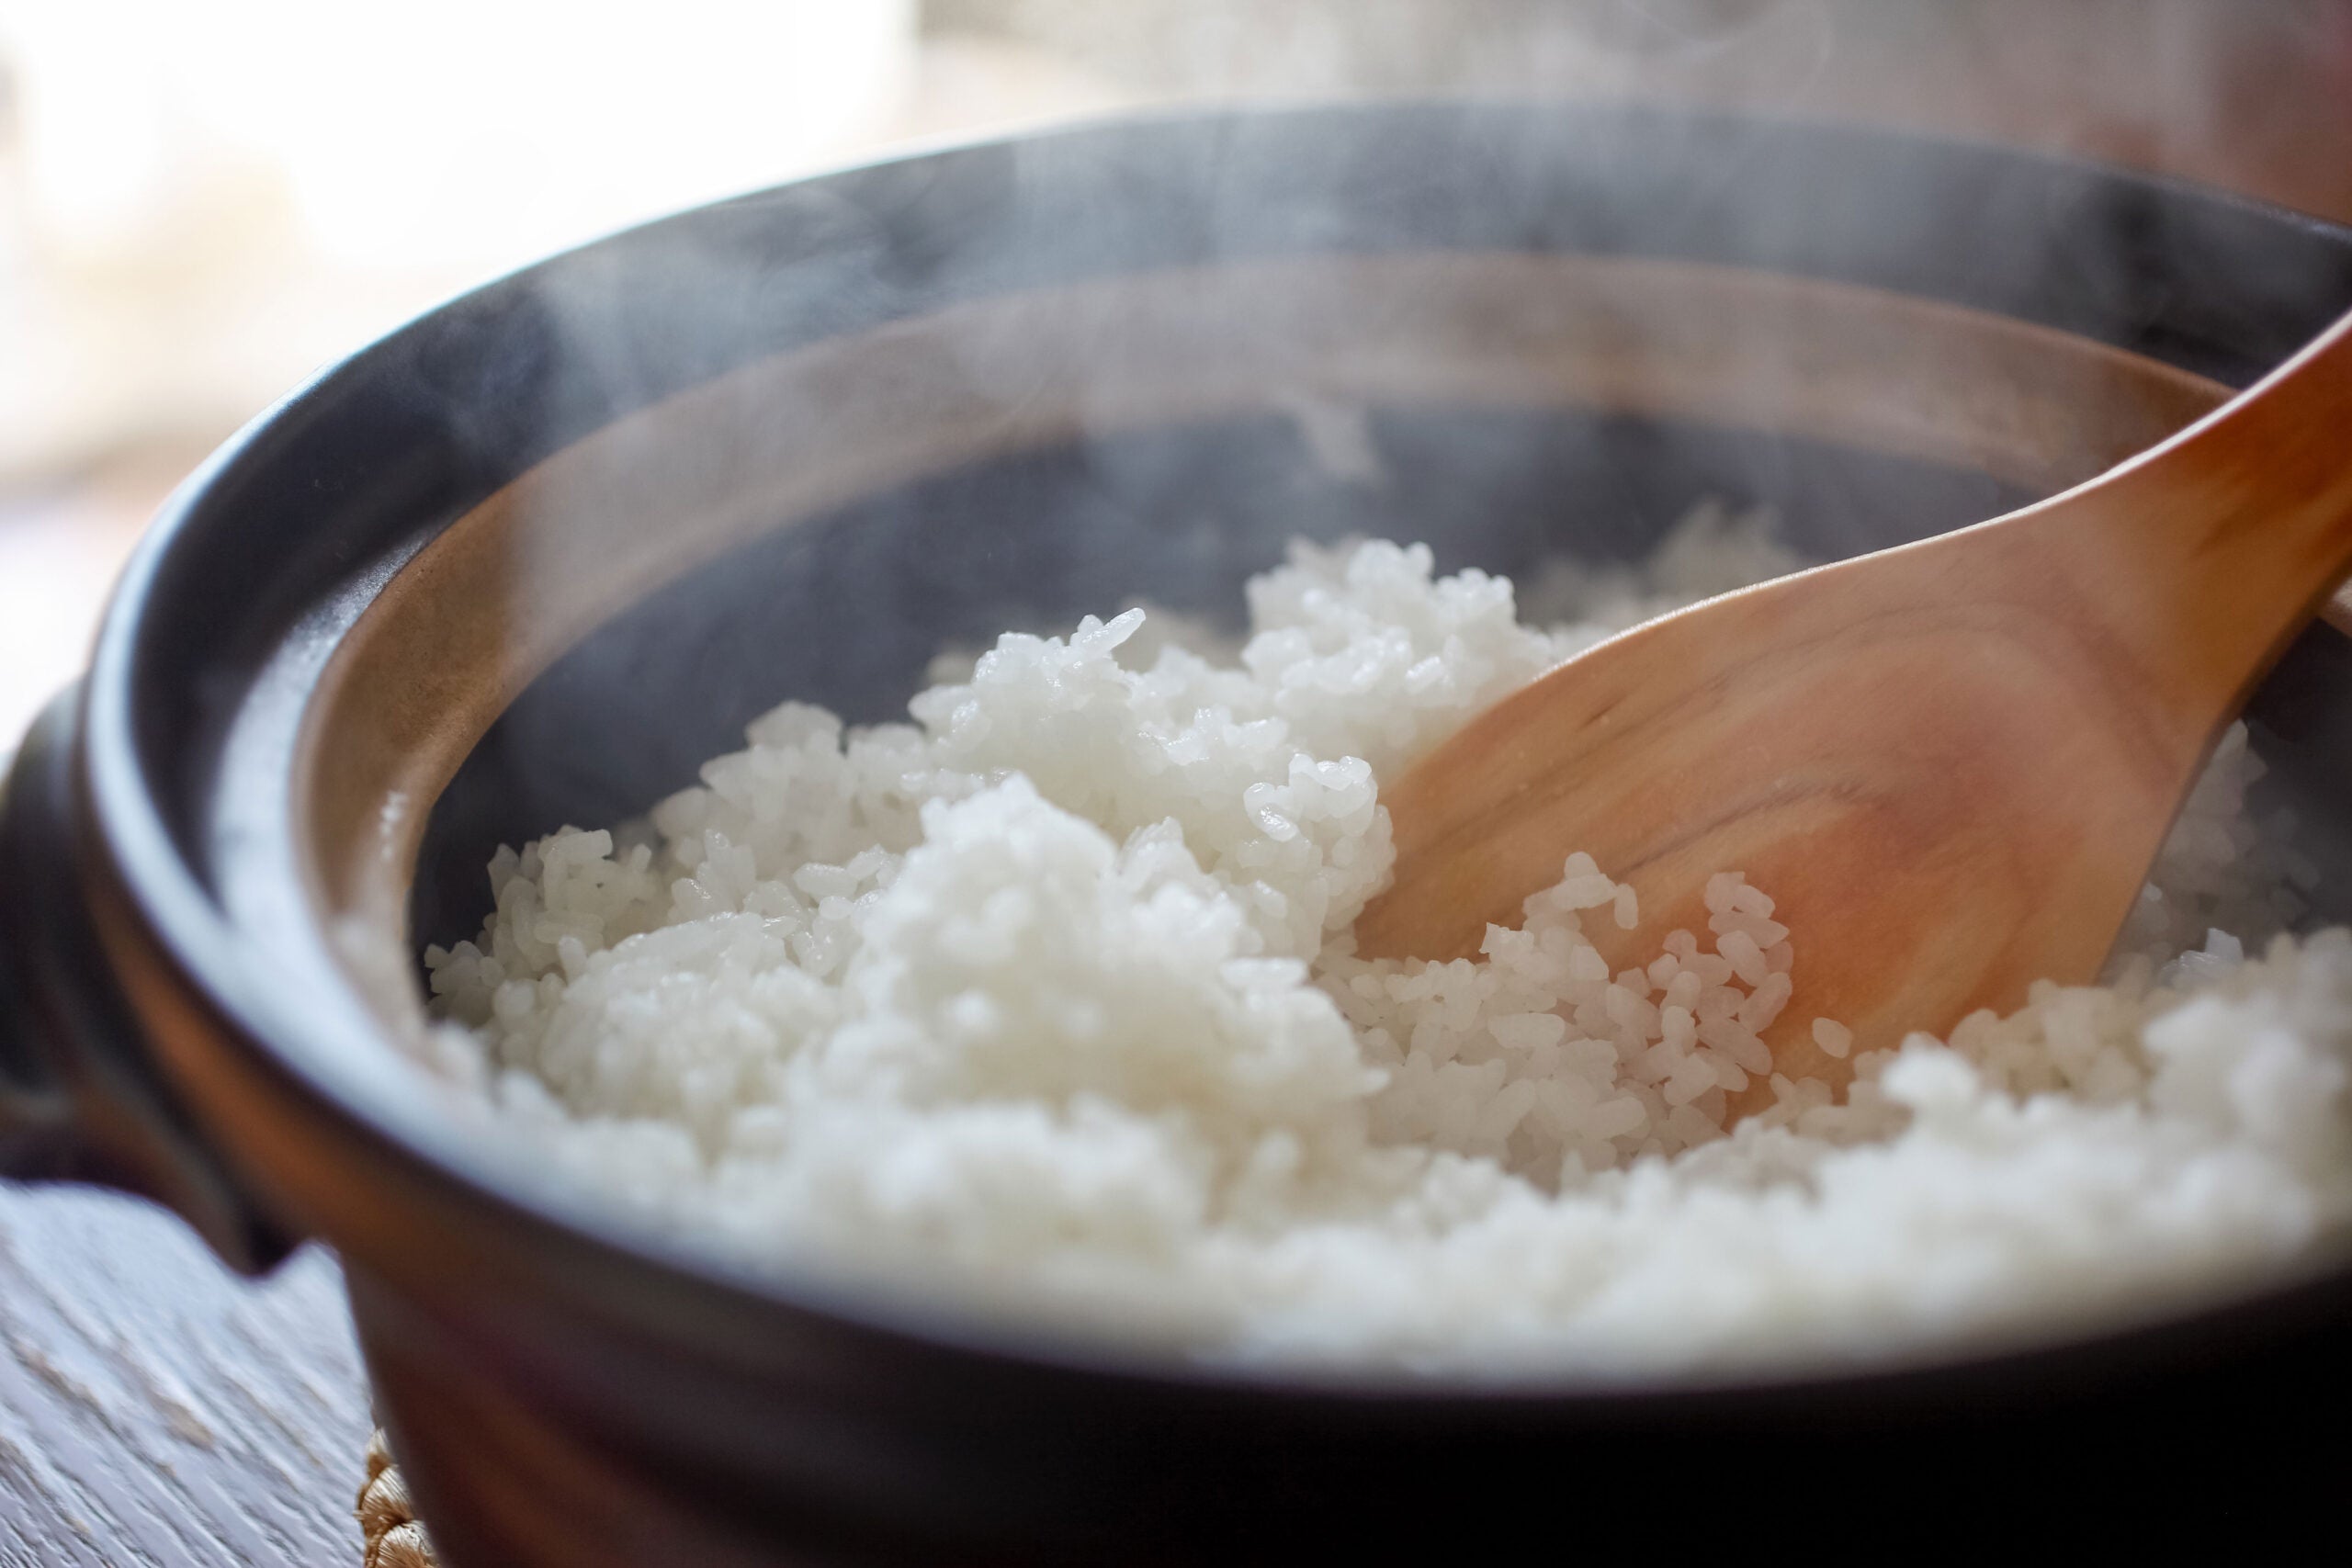 https://www.saveur.com/uploads/2022/09/19/00-LEAD-best-rice-cookers-saveur.-scaled.jpg?auto=webp